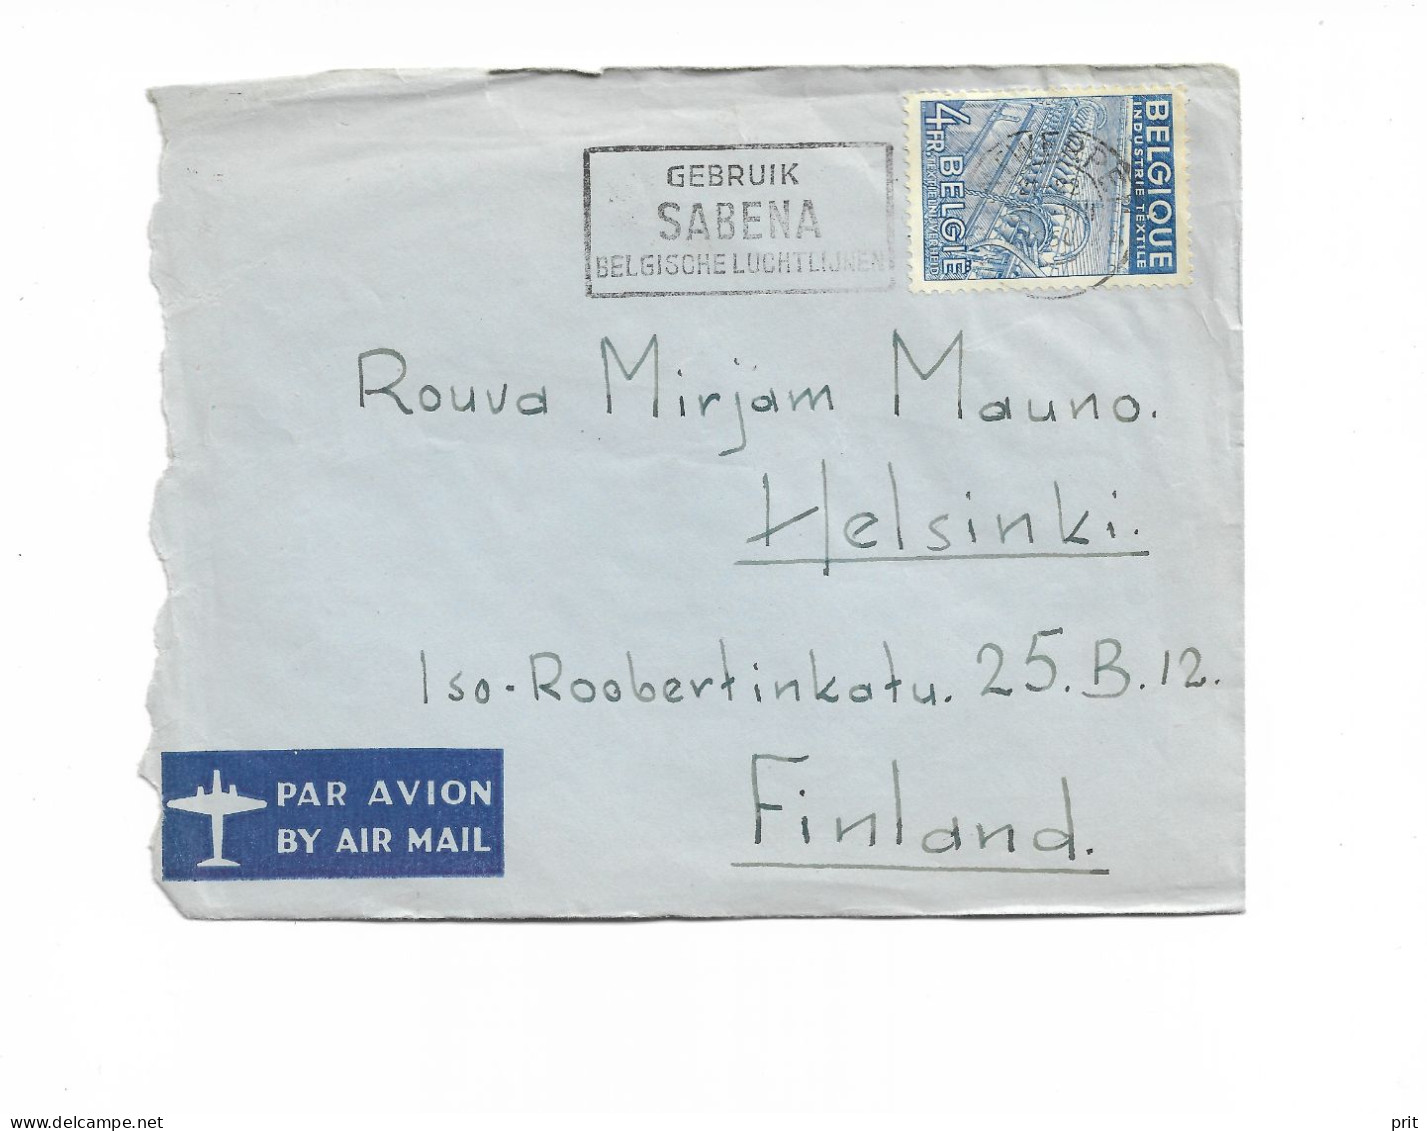 Antwerpen Belgium Airmail Cover To Helsinki Finland 1950 "Gebruik Sabena Belgische Luchtlijnen" Slogan Cancel - Cartas & Documentos